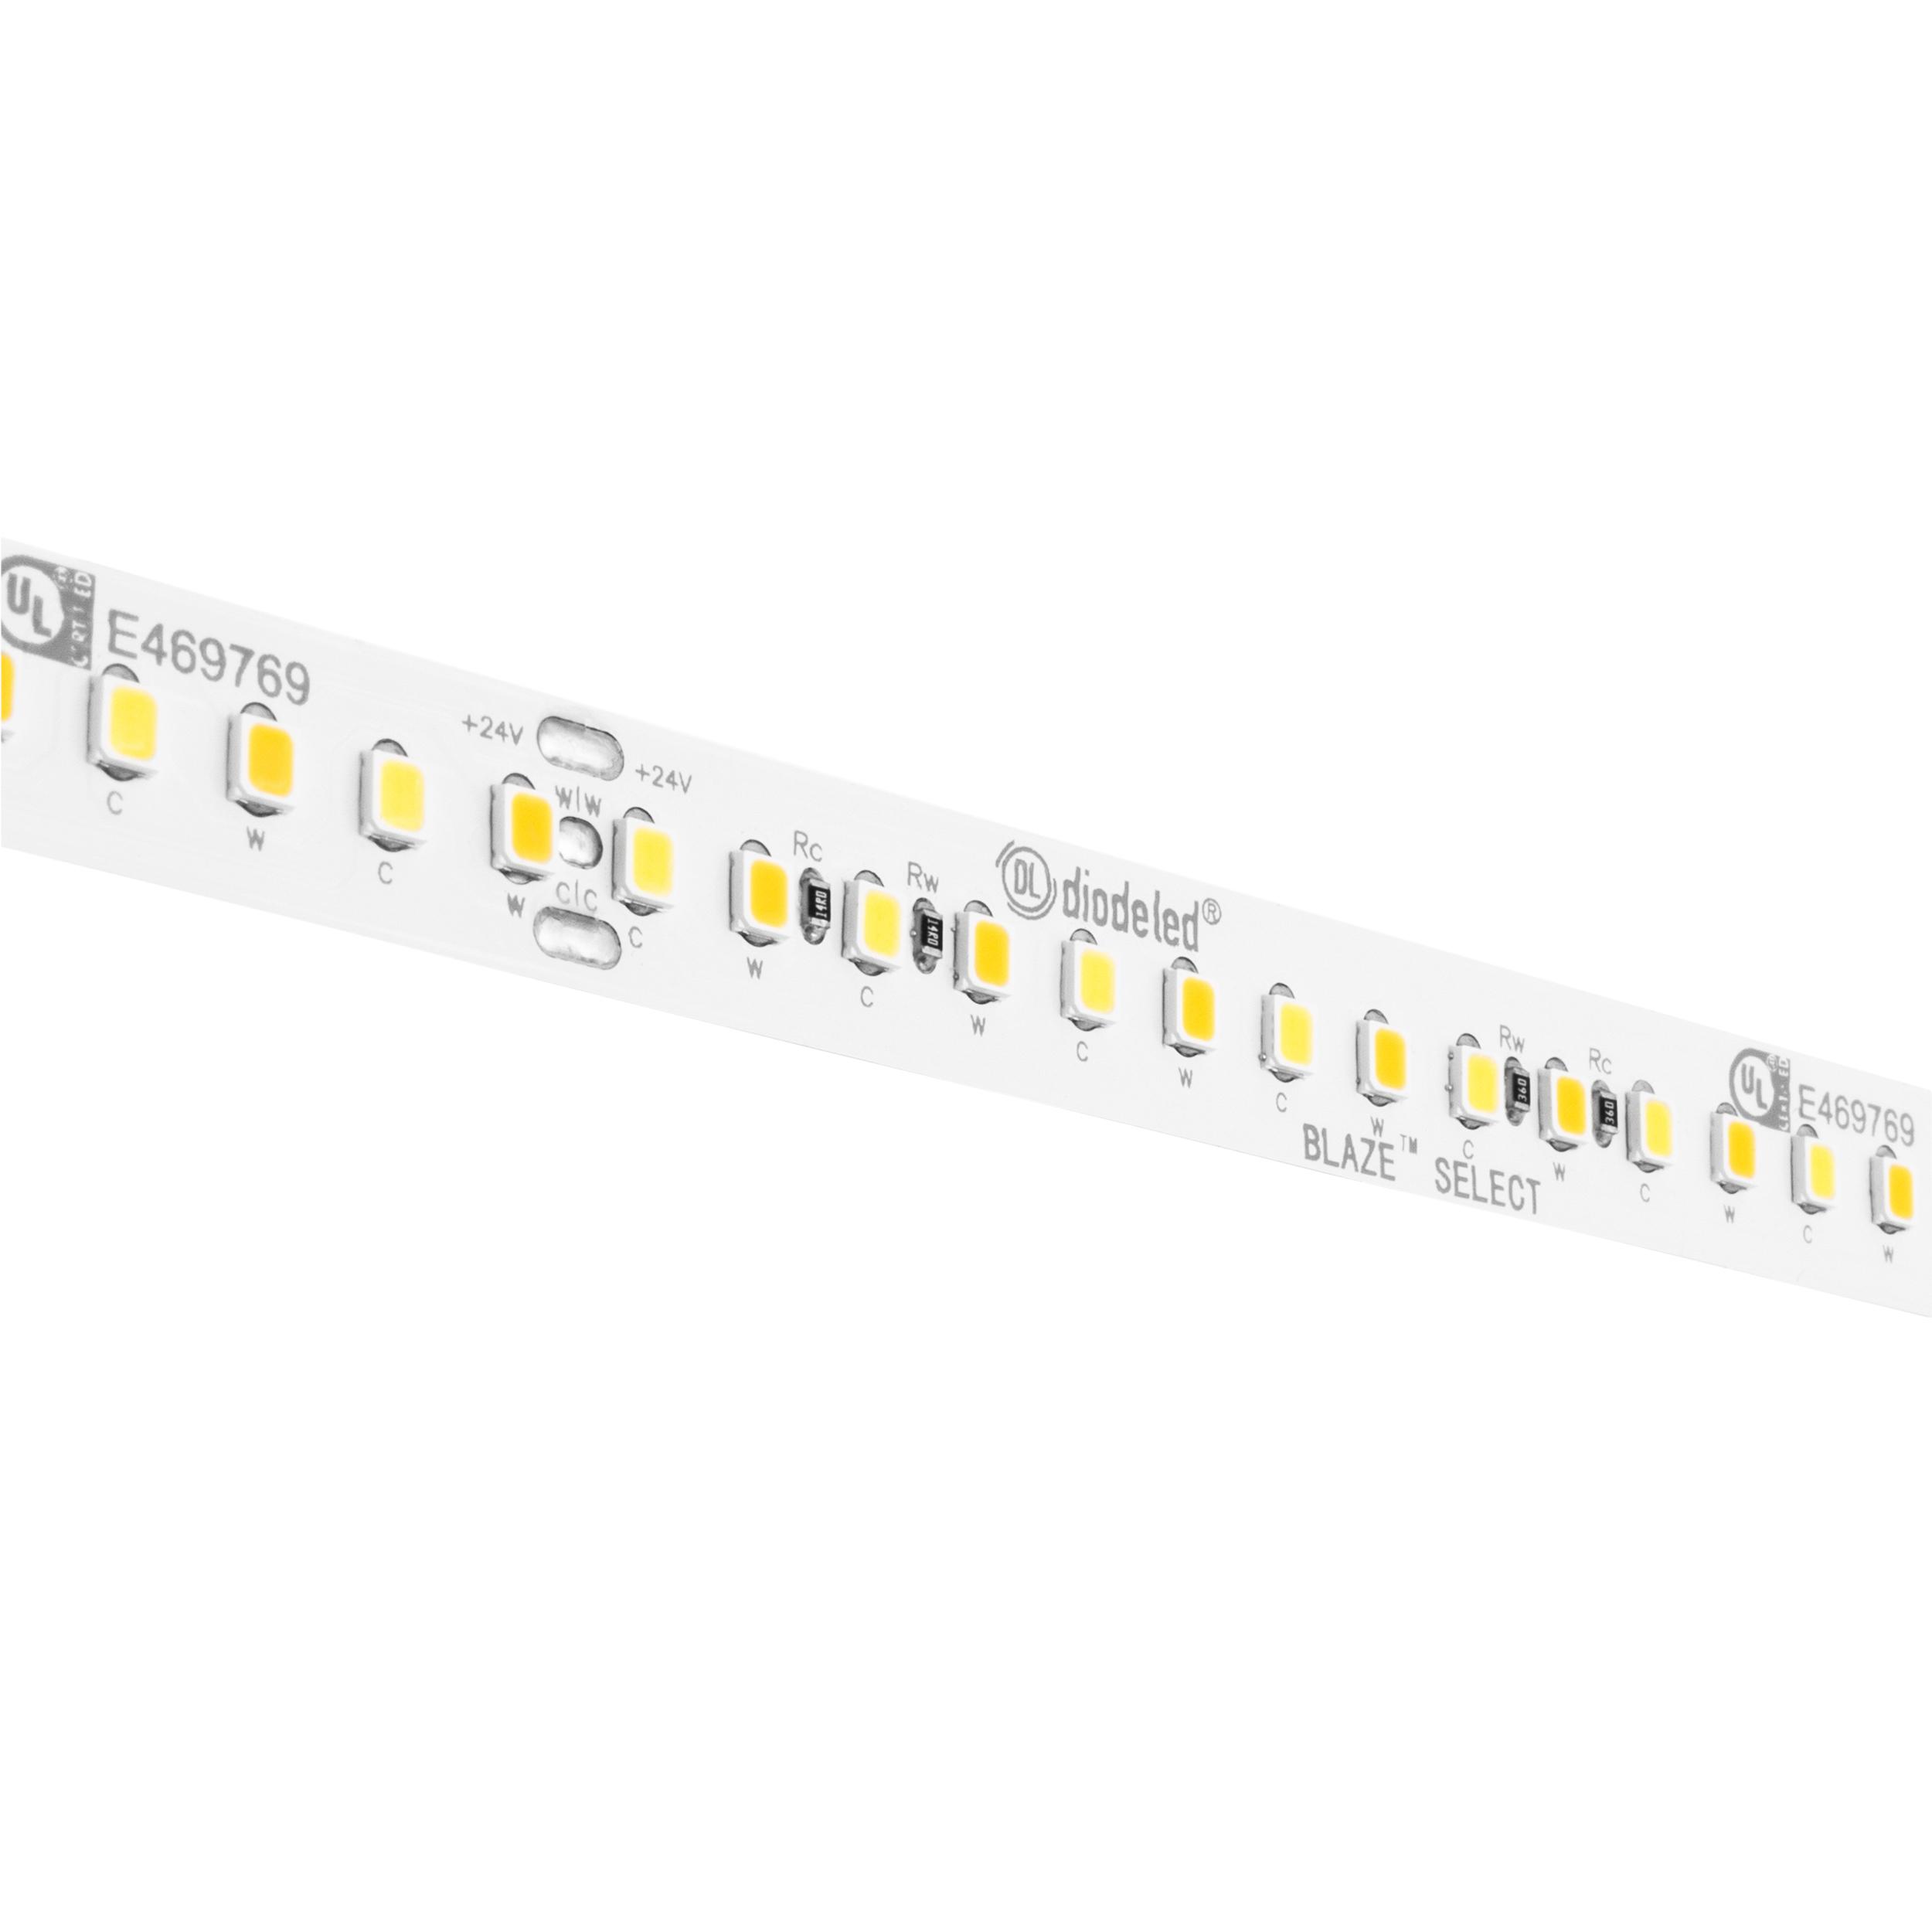 BLAZE™ SELECT Tunable White LED Lighting System